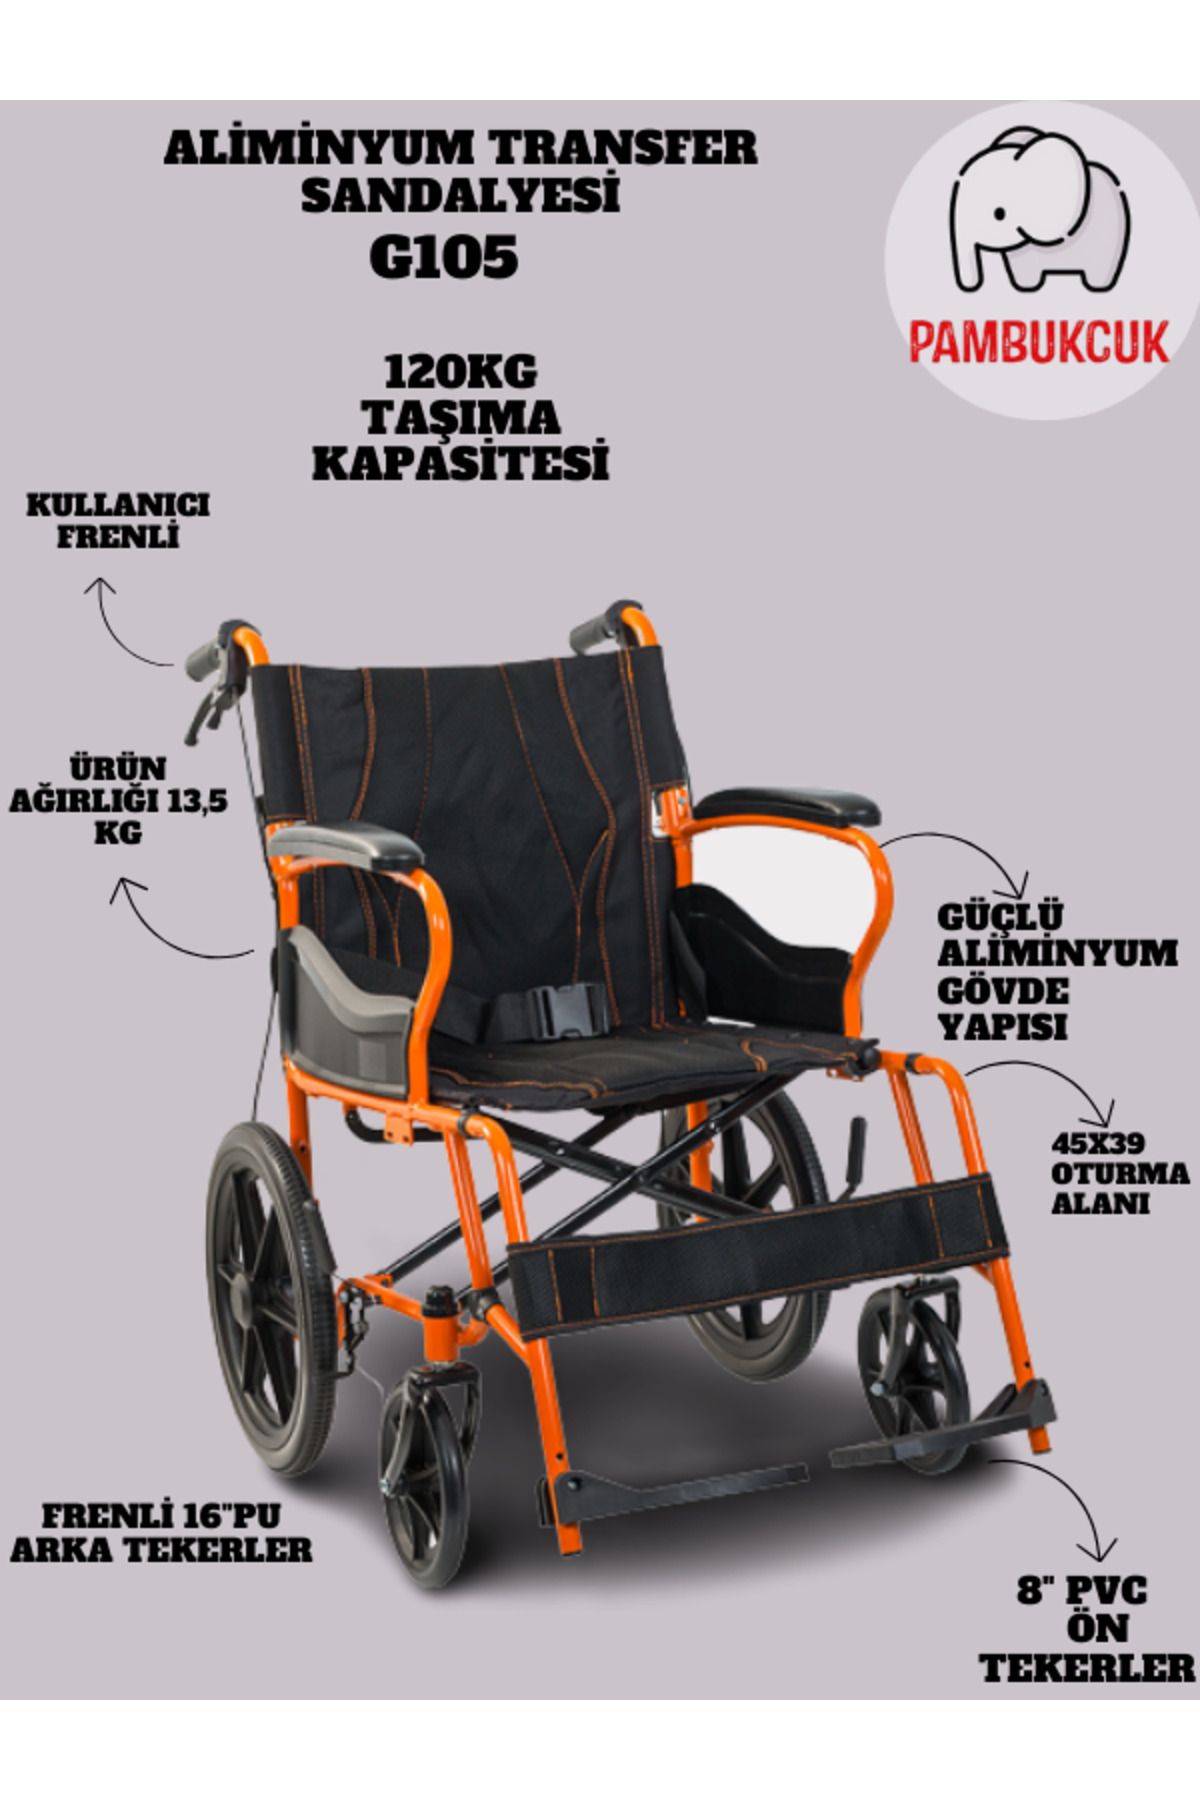 pambukcuk Frenli Aliminyum Transfer Sandalyesi Tekerlekli Sandalye Refakatçi Sandalyesi G105